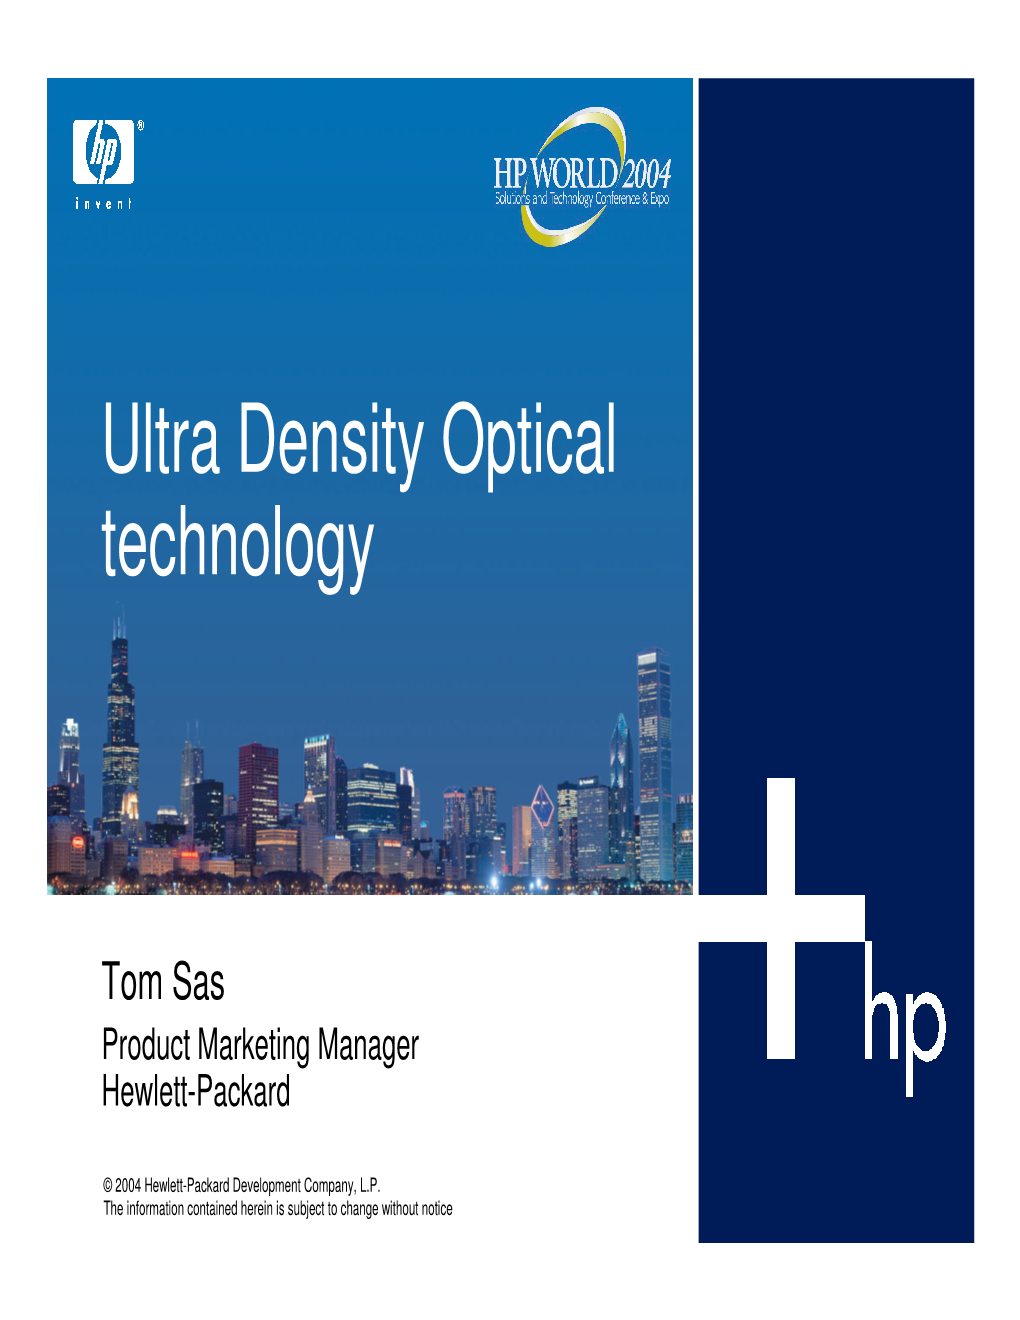 Ultra Density Optical Technology